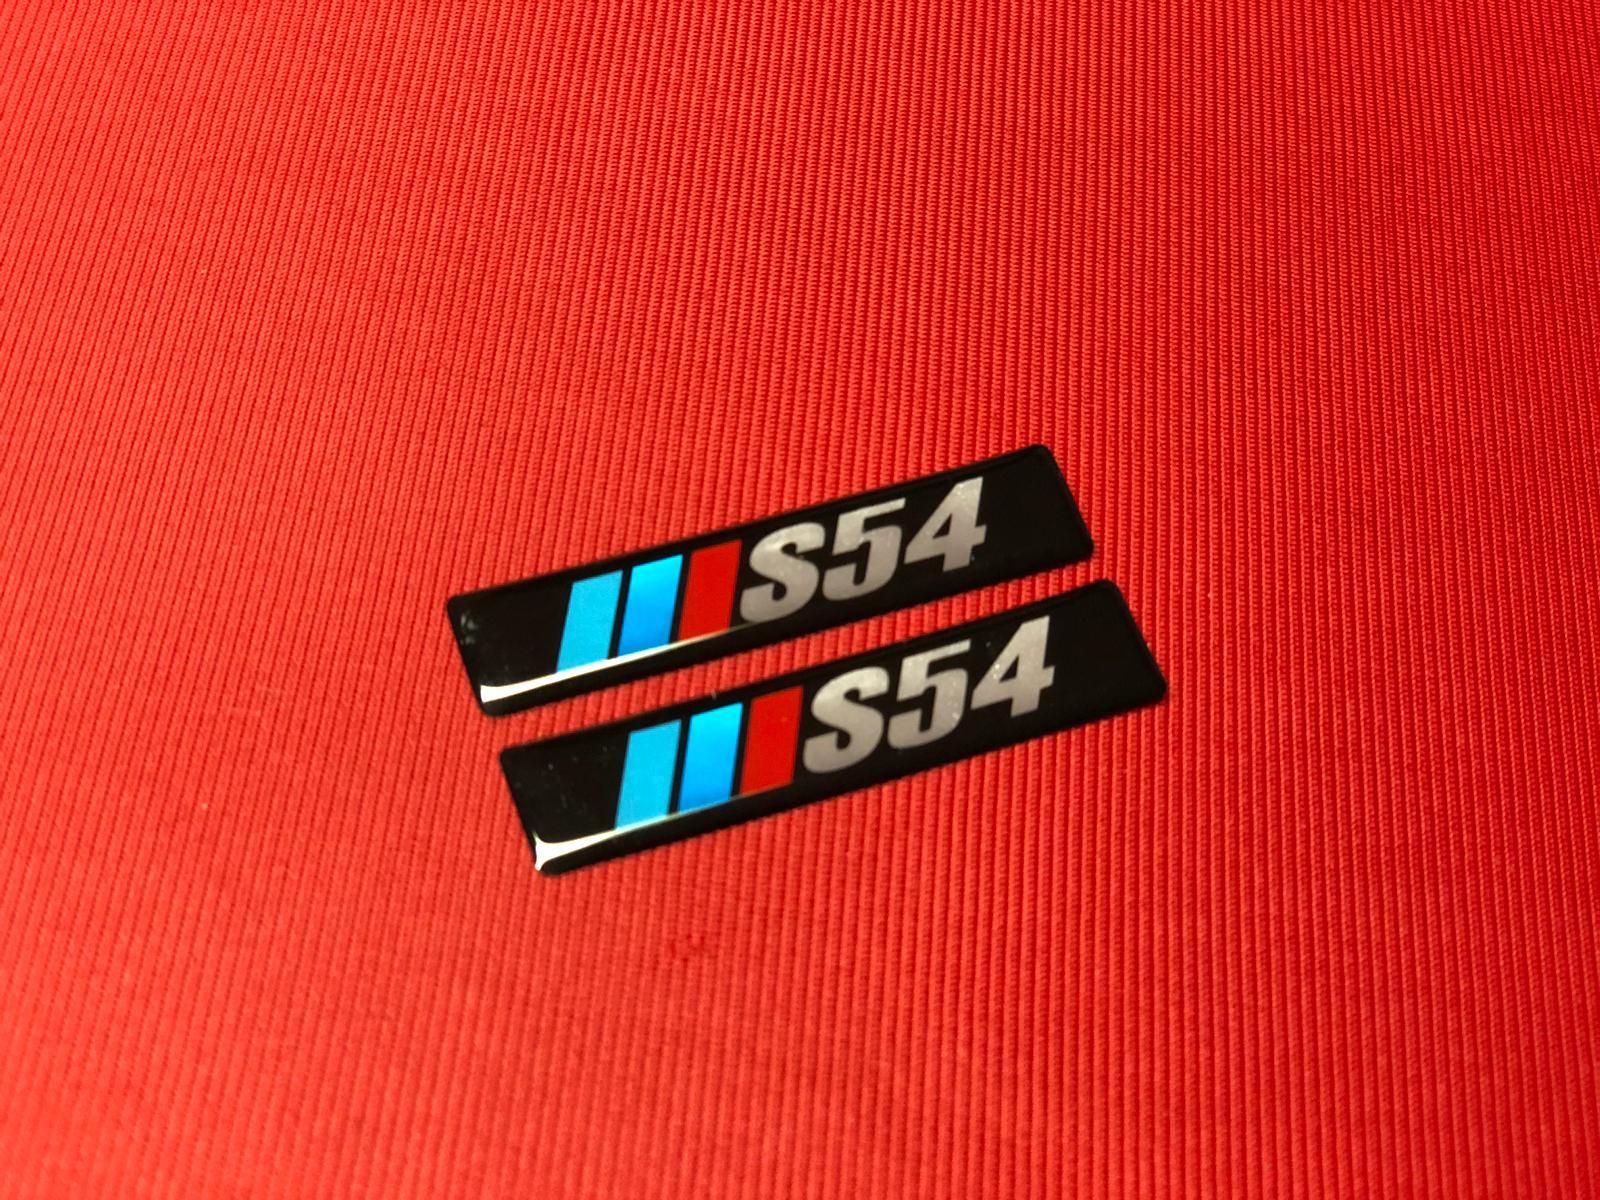 01-06 BMW E46 M3 Center Dome SMG Shift Plate Letters Logos Emblems